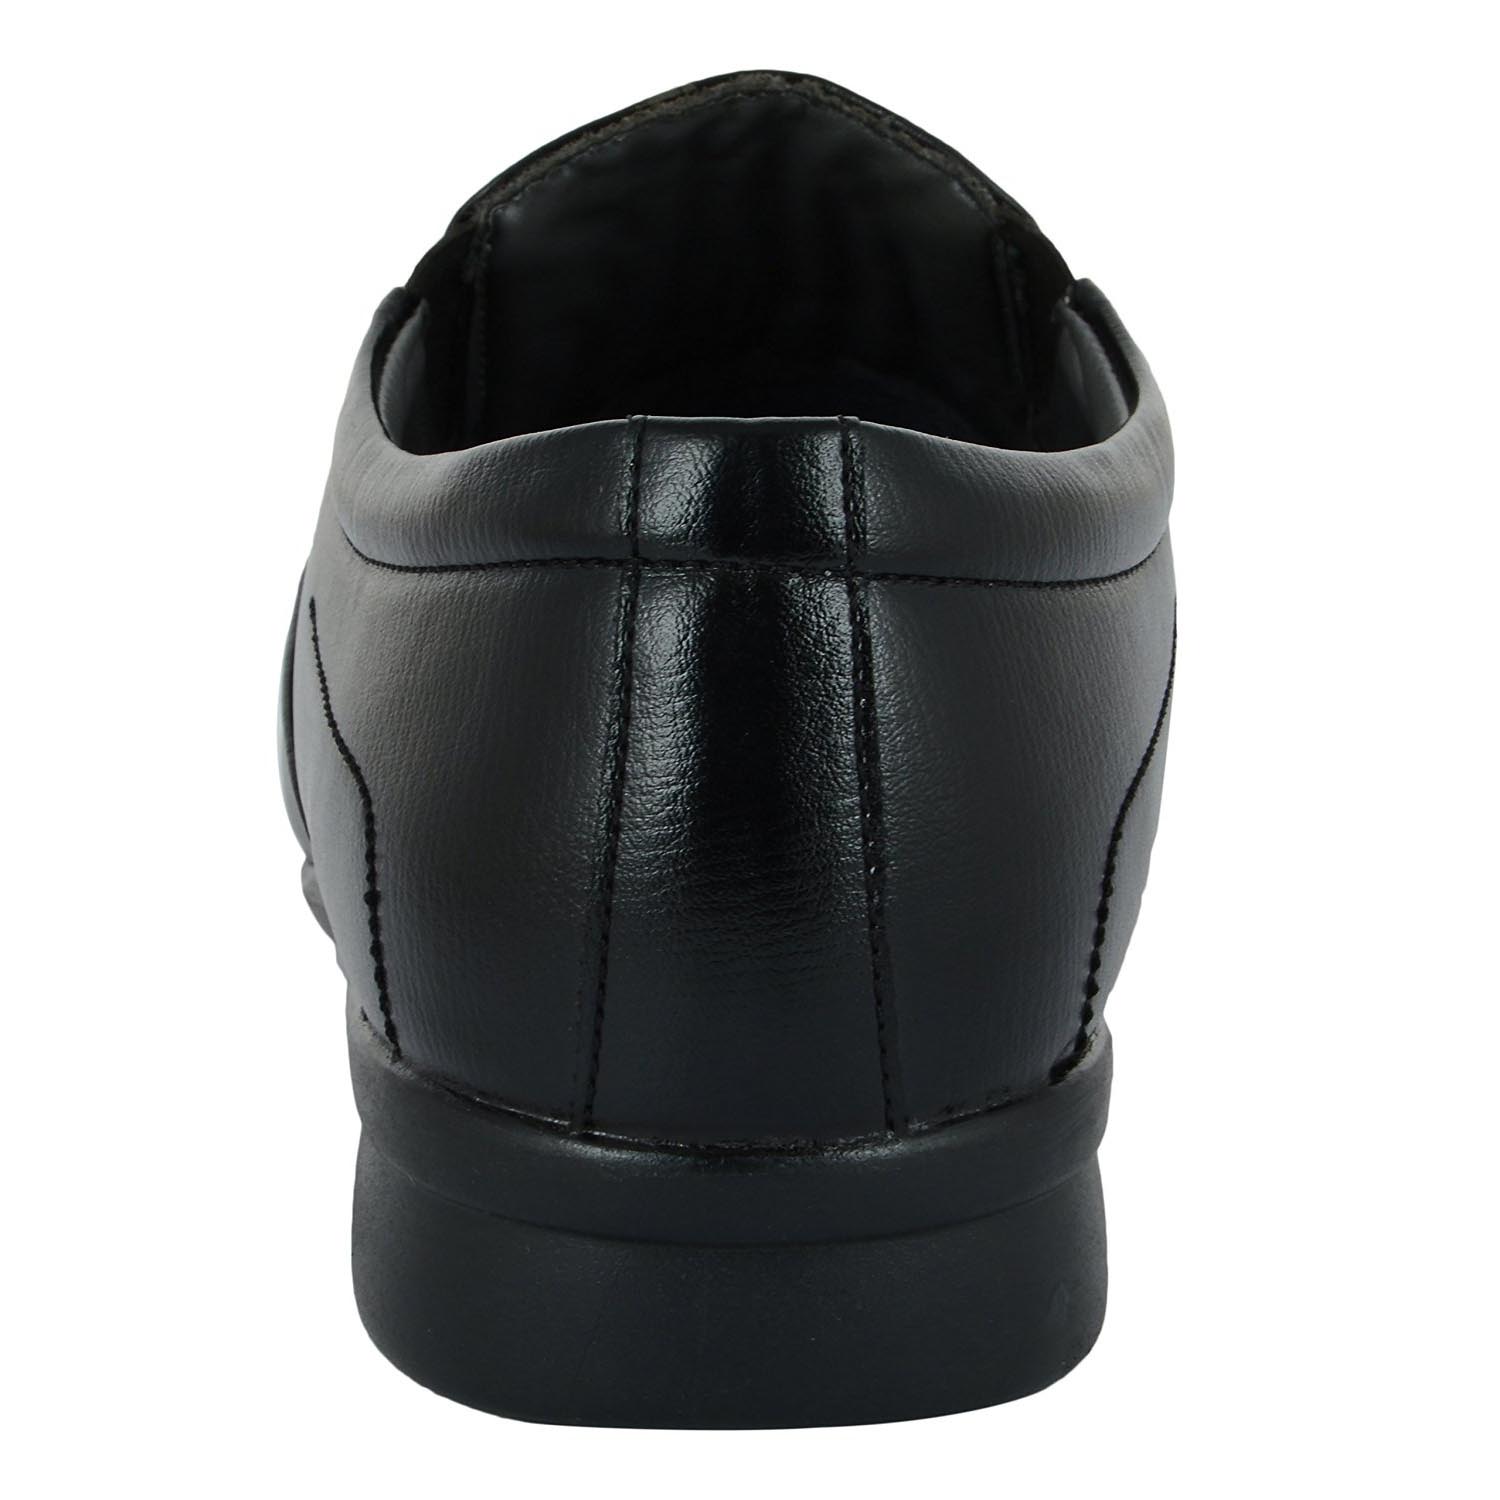 Buy Footgear Men's Black Formal Slip On Shoe Online @ ₹1999 from ShopClues